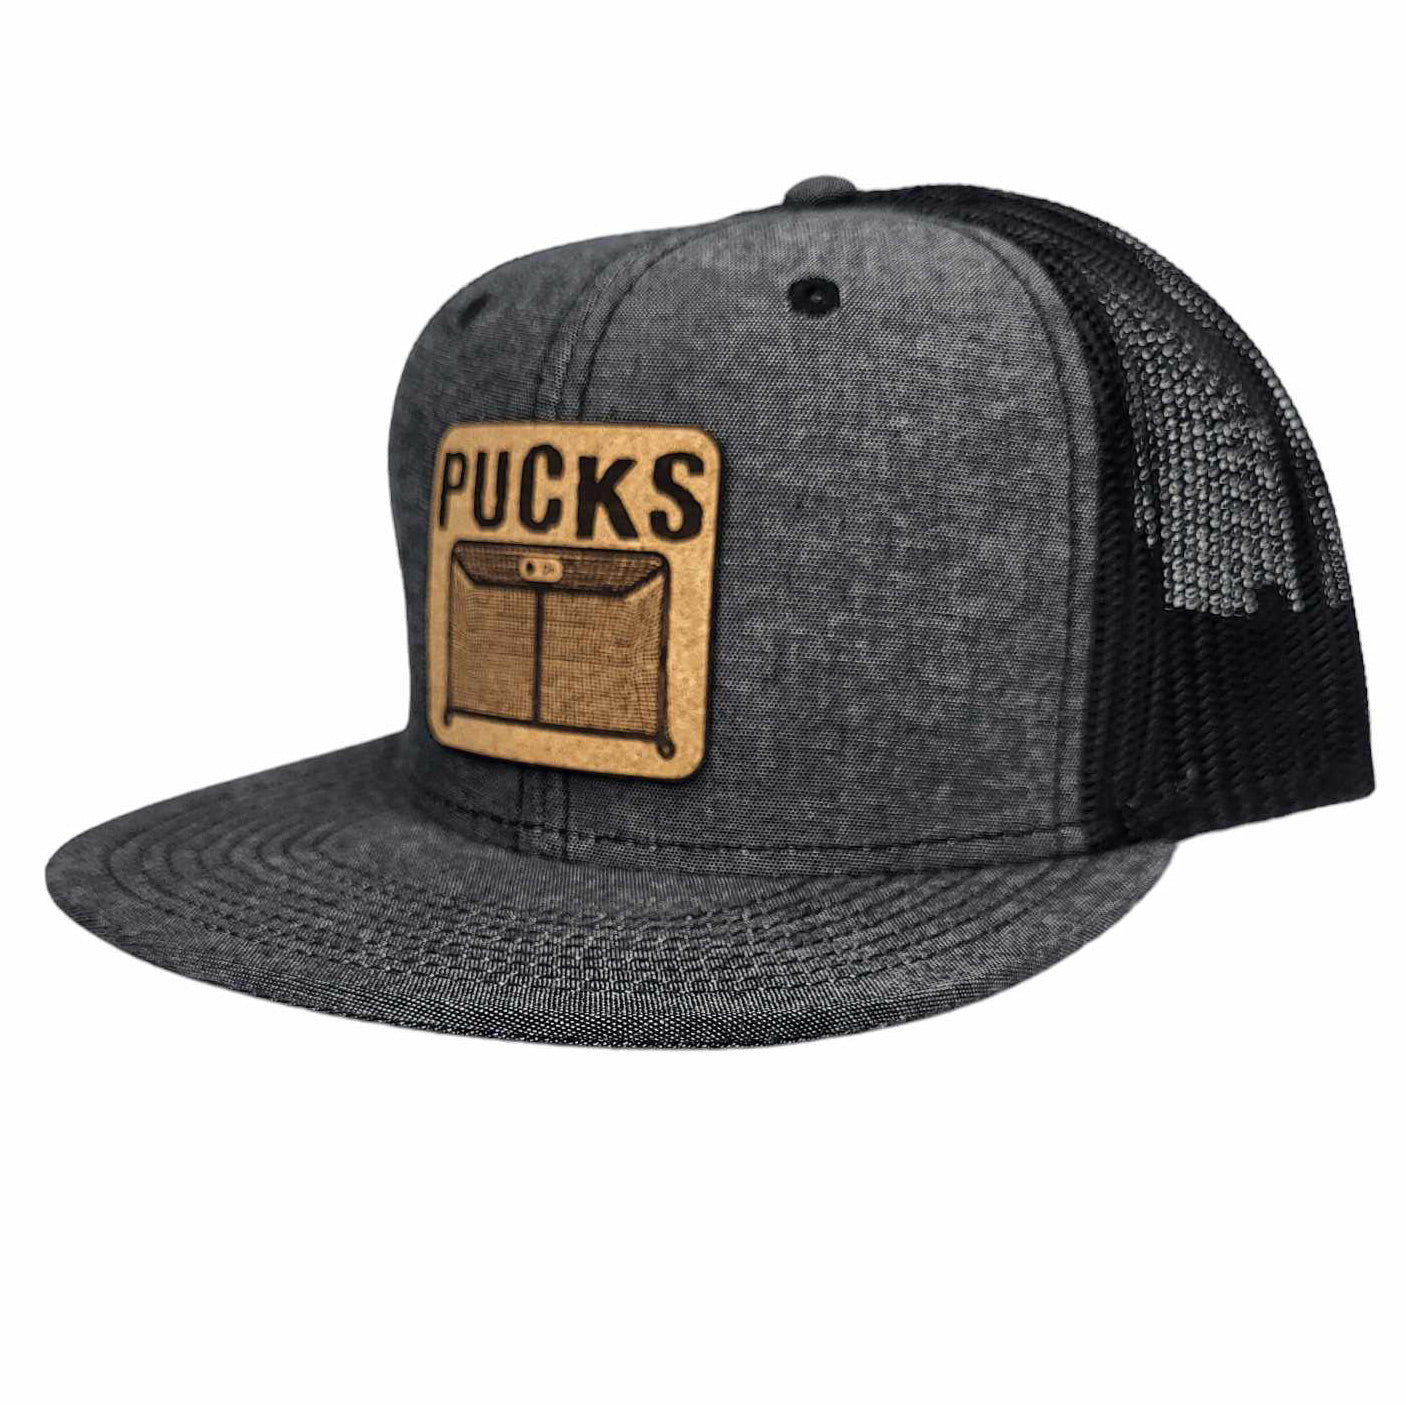 Pucks On Net Hockey Hat